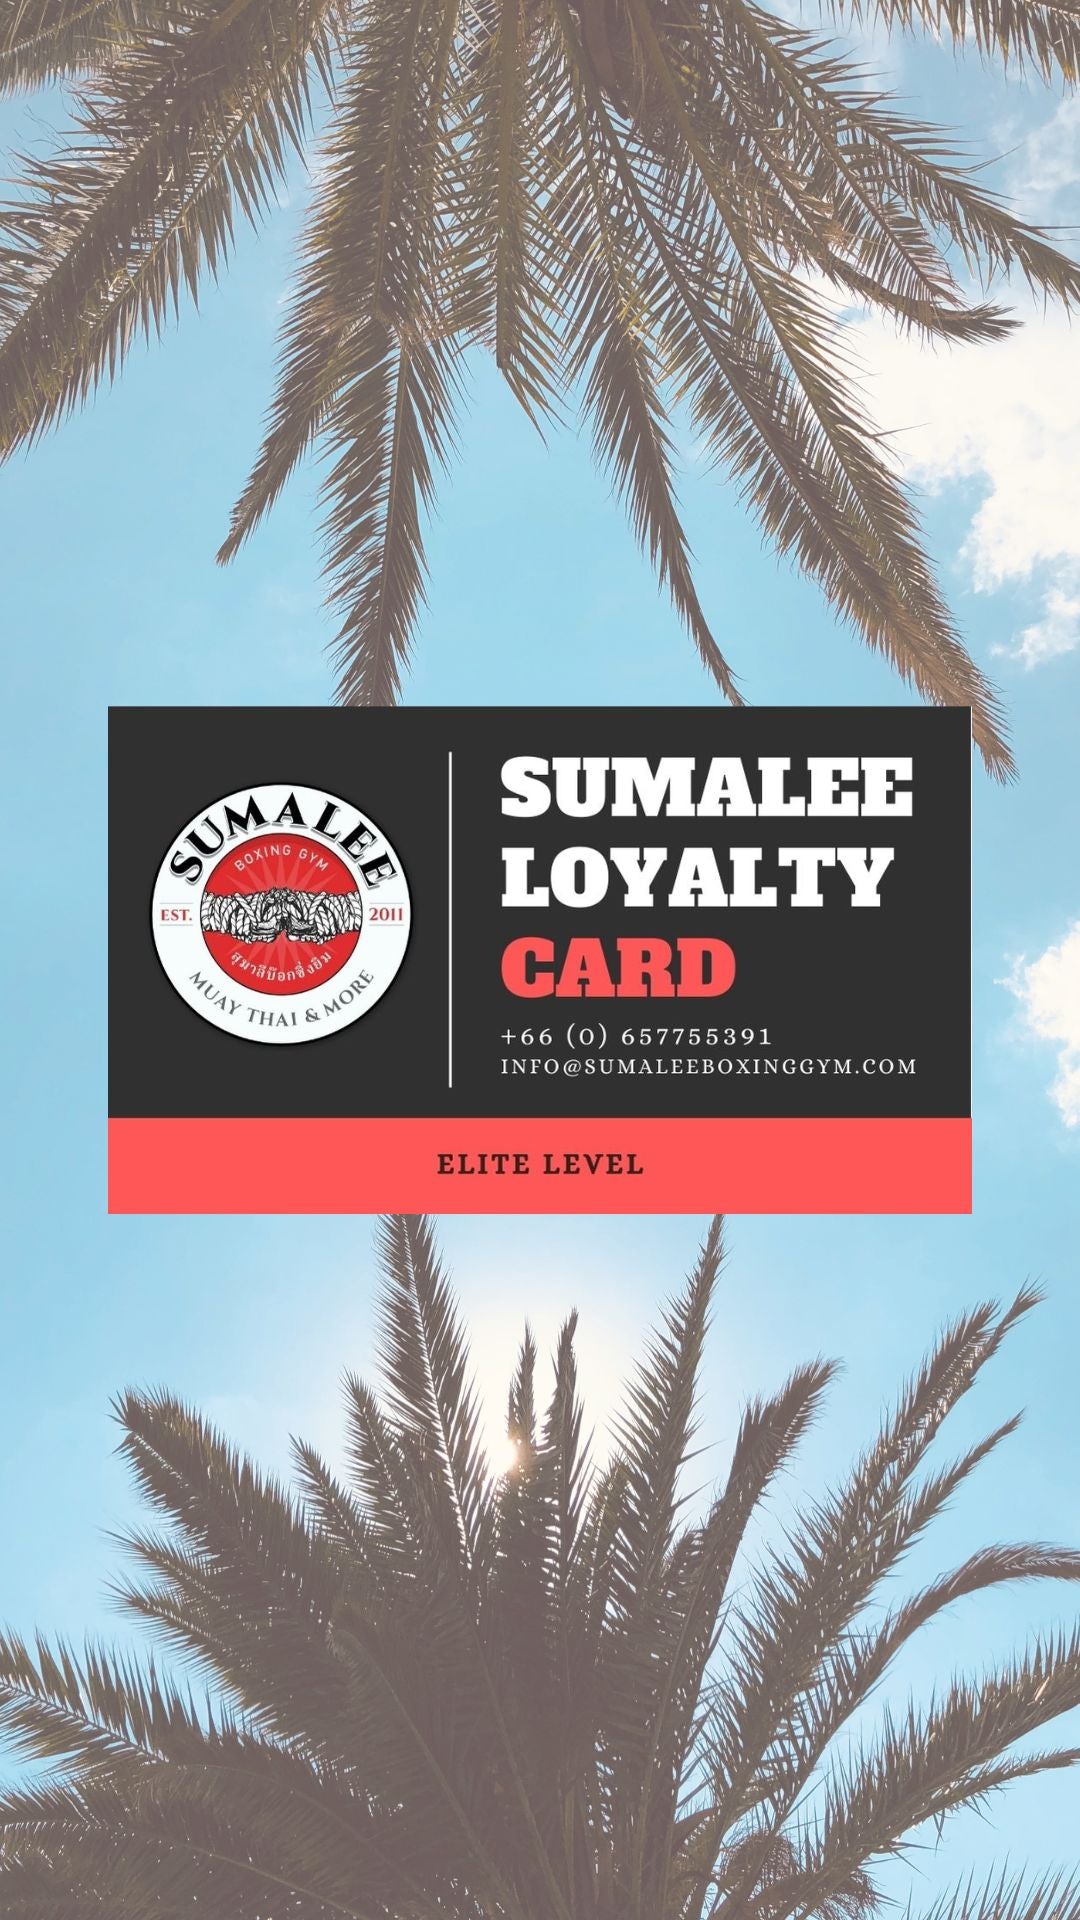 Sumalee Loyalty Card Elite Level